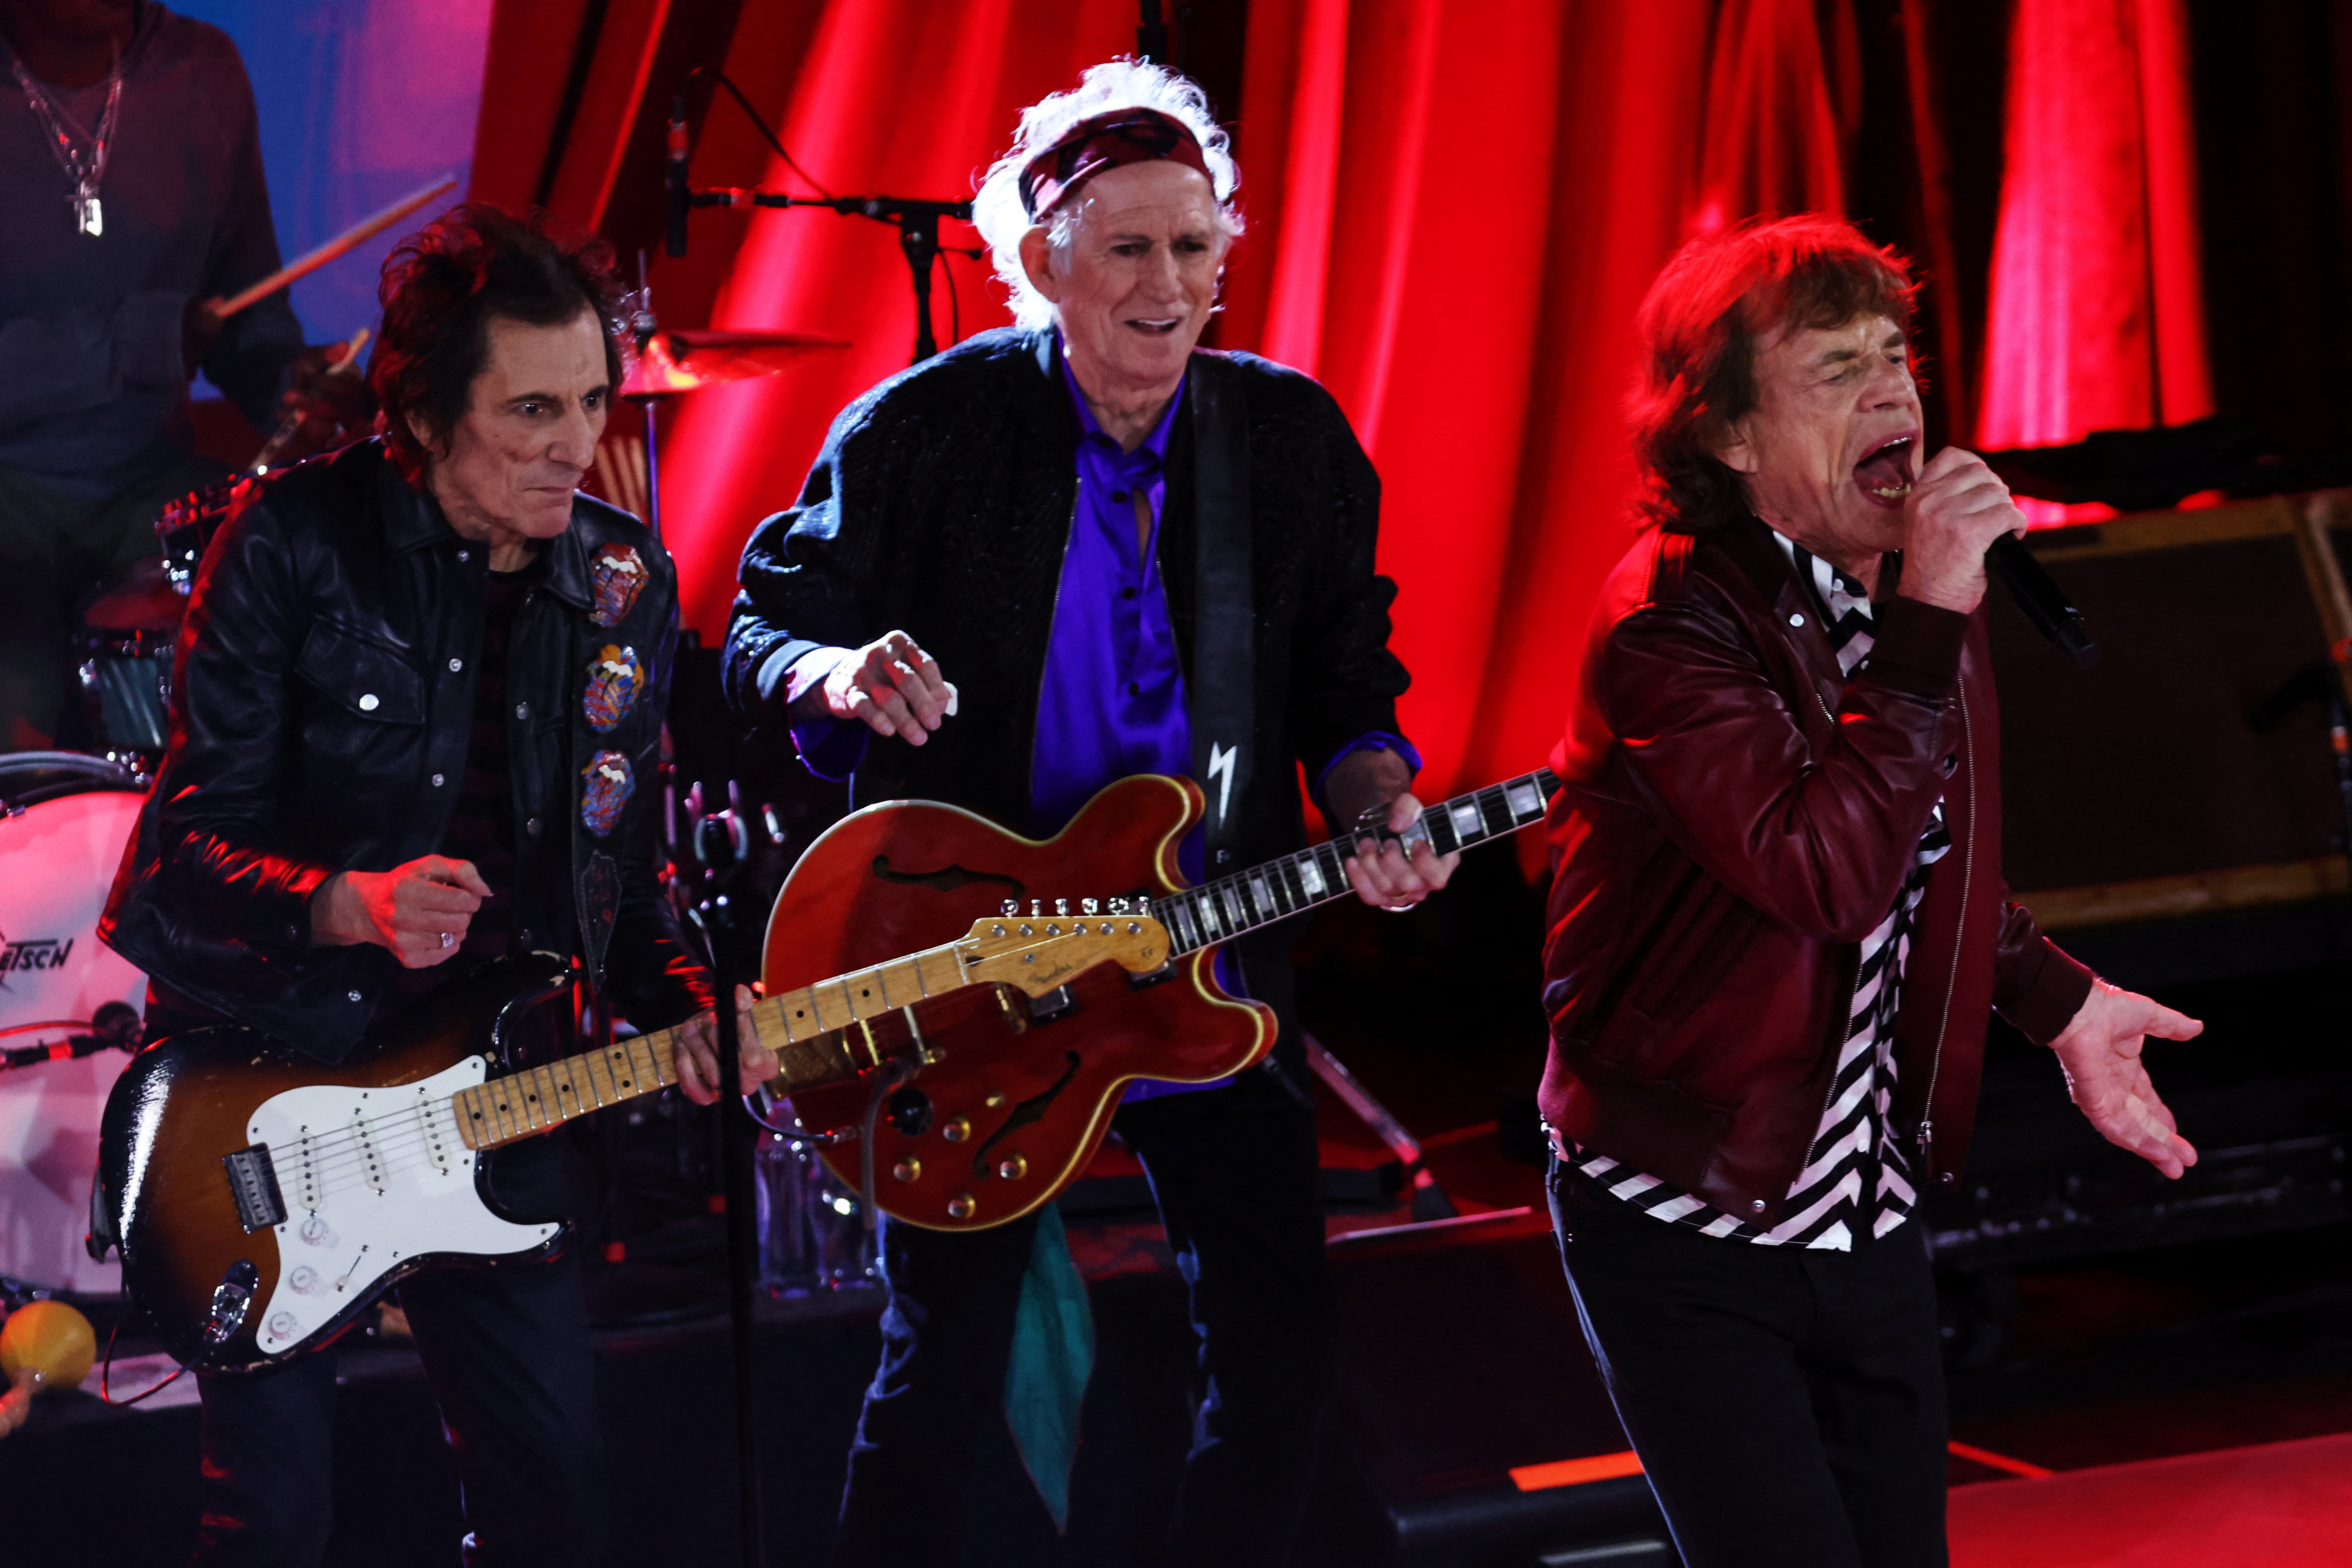 Best Rolling Stones 70s Songs: 20 Rock'n'Roll Classics